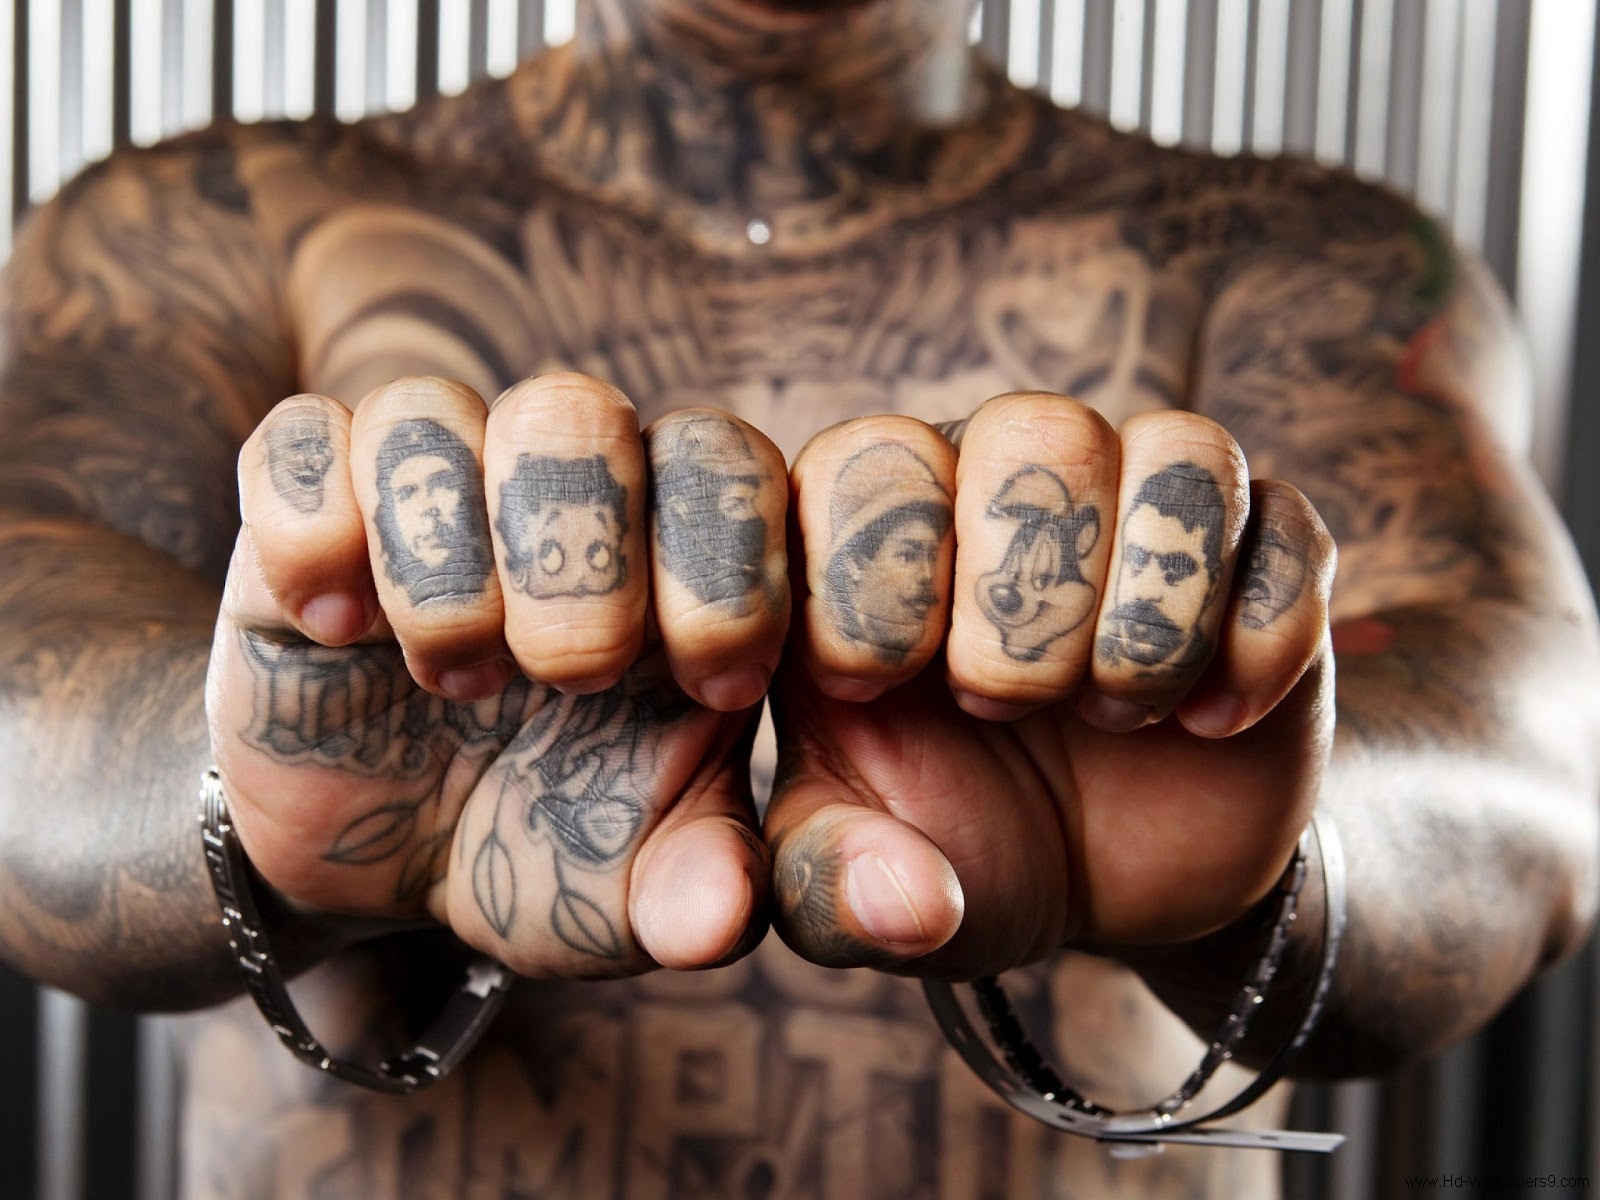 Portrait Finger Tattoos - 1600x1200 Wallpaper 